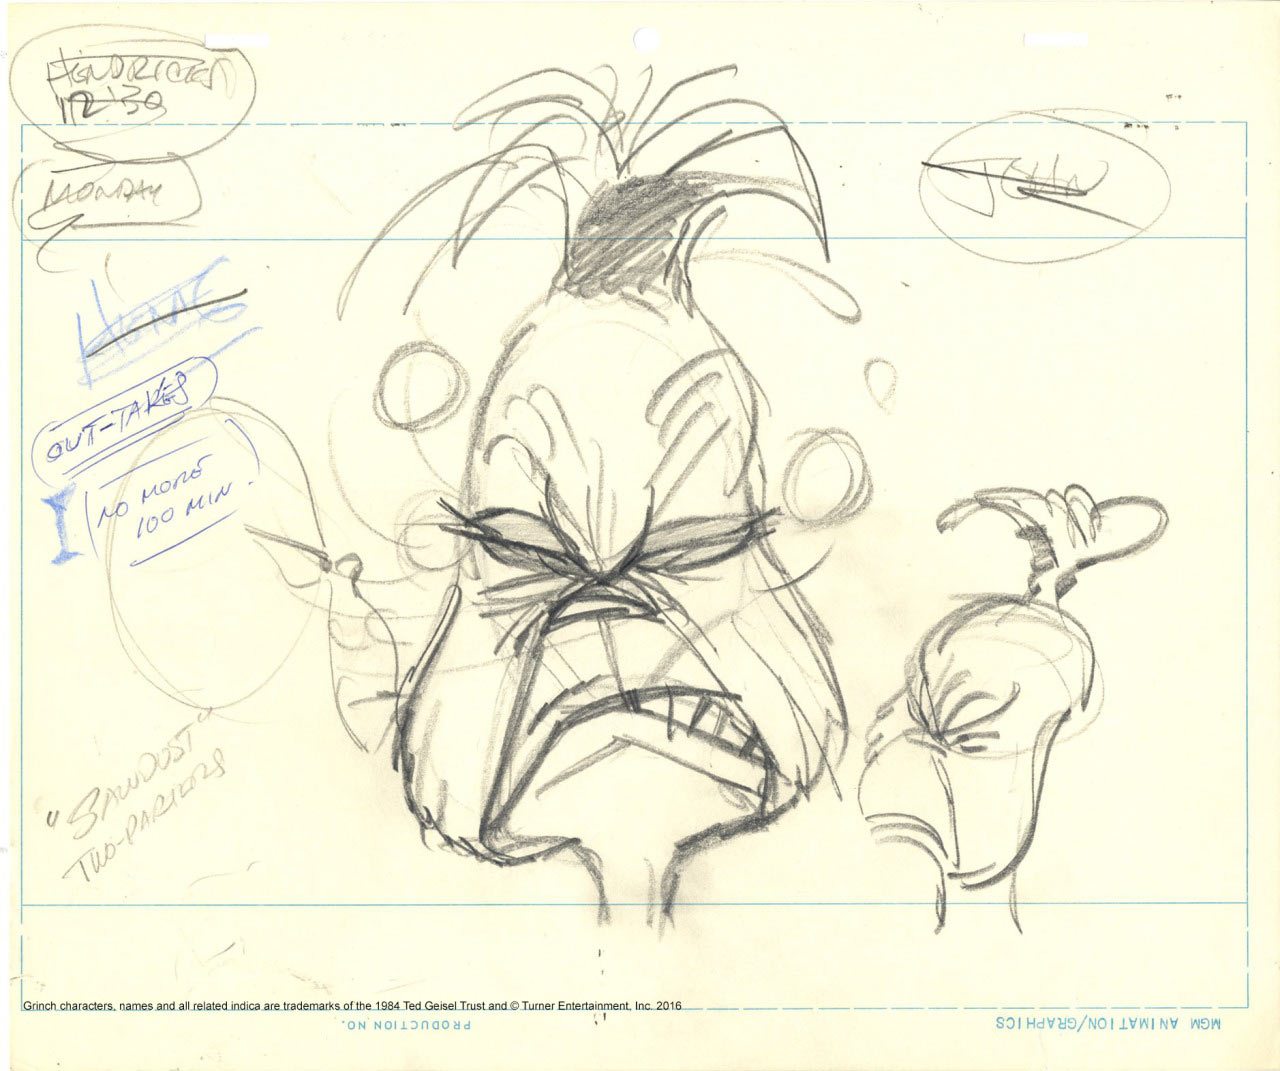 Grinch practice drawing by Chuck Jones.